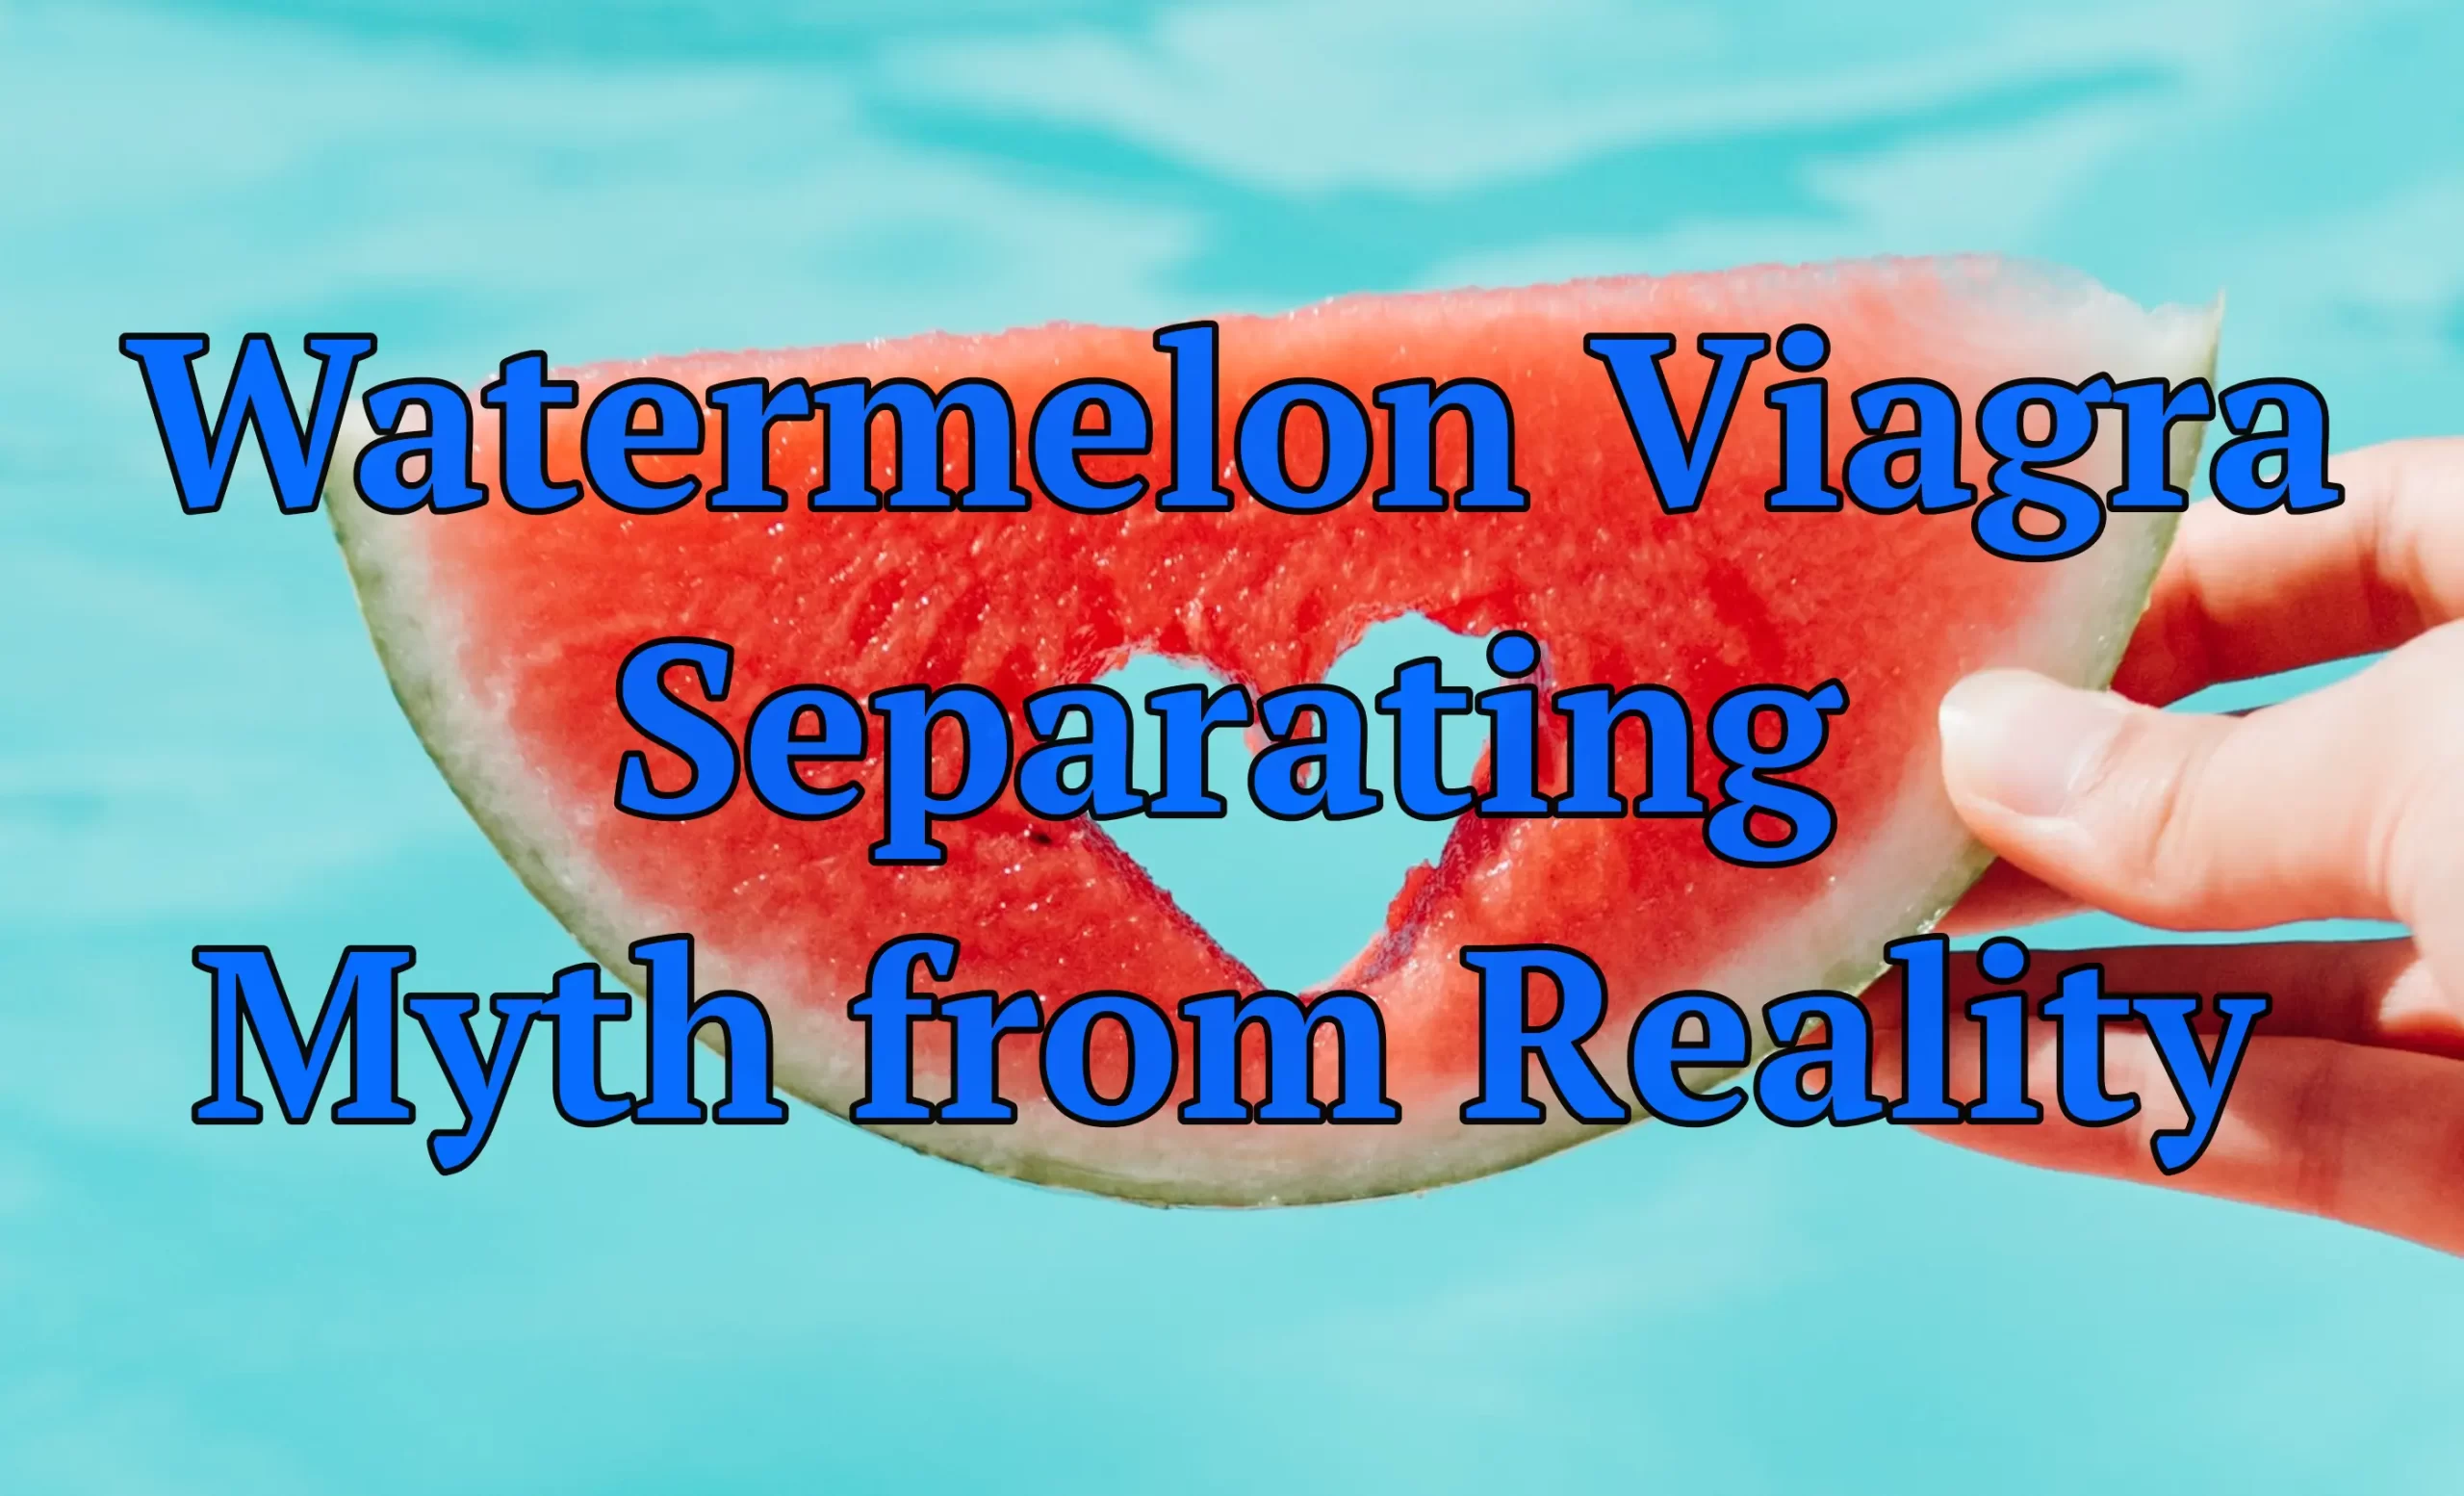 Watermelon Viagra Separating Myth from Reality